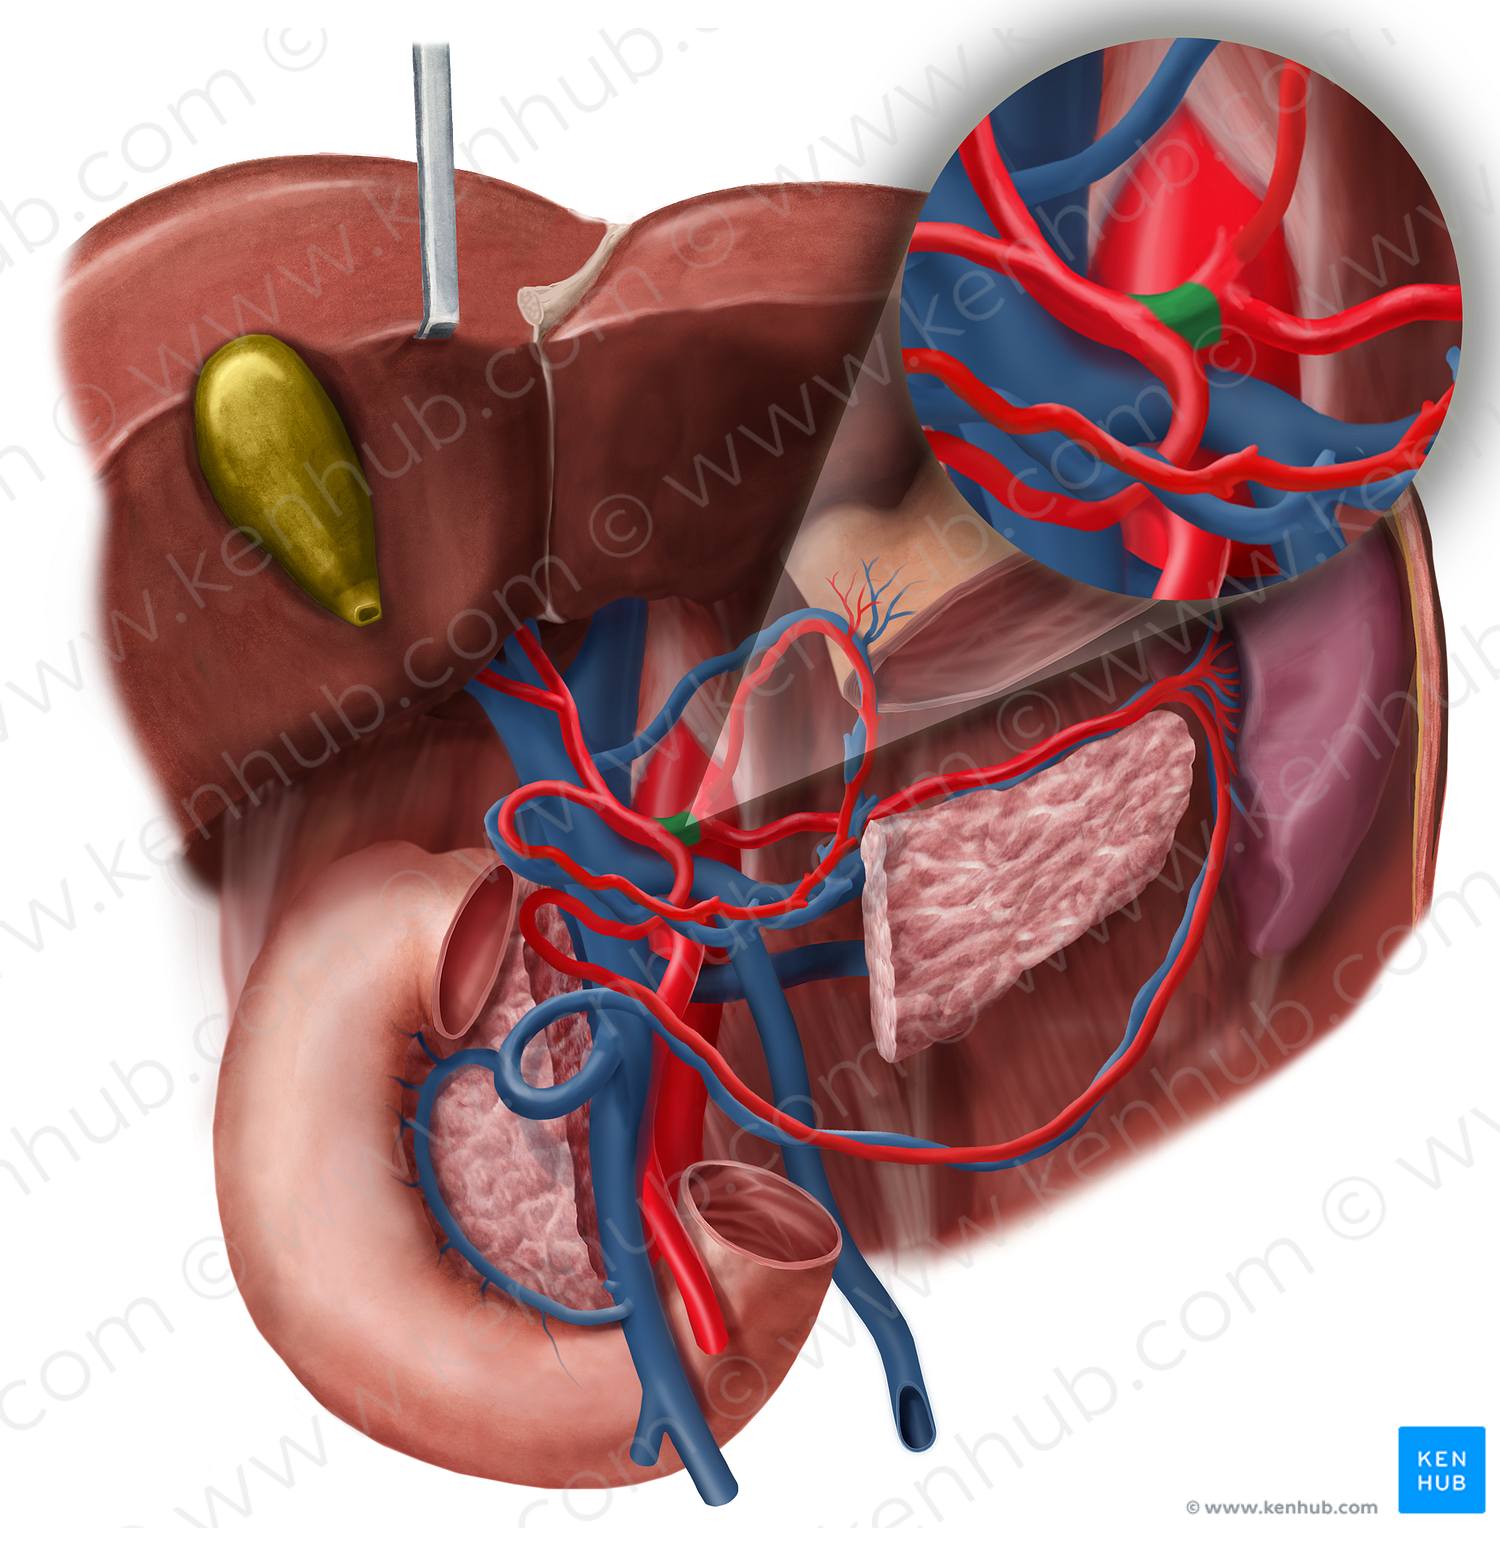 Common hepatic artery (#1328)